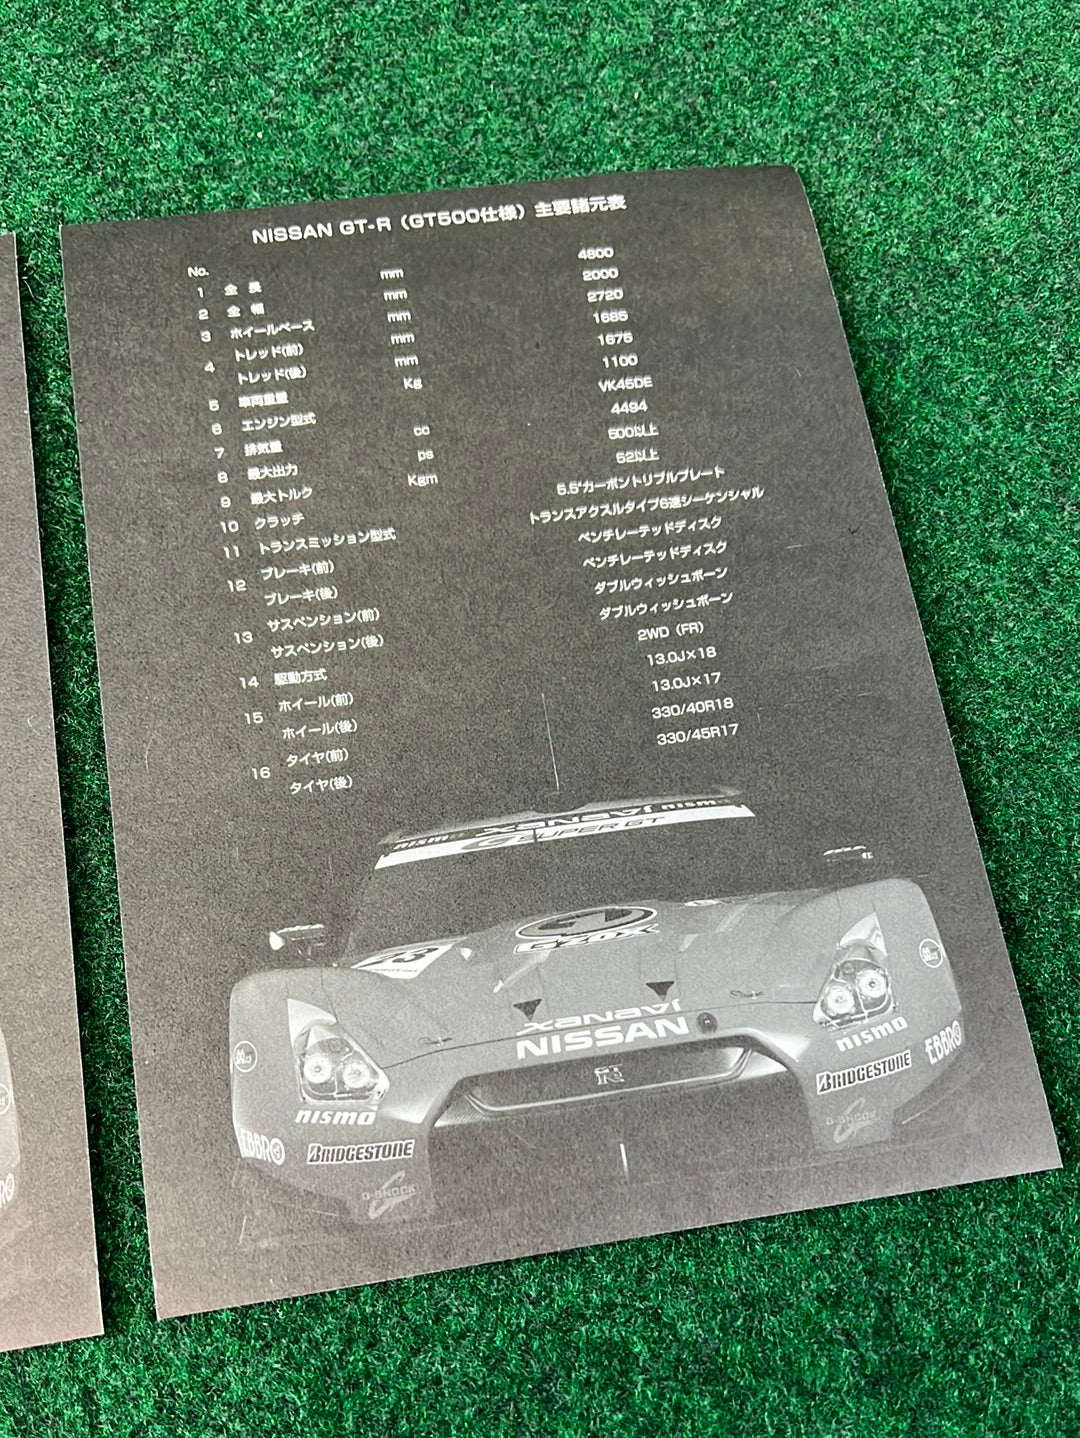 Super GT Nissan Motorsports Xanavi Nismo R35 GTR Sticker Sheet Set